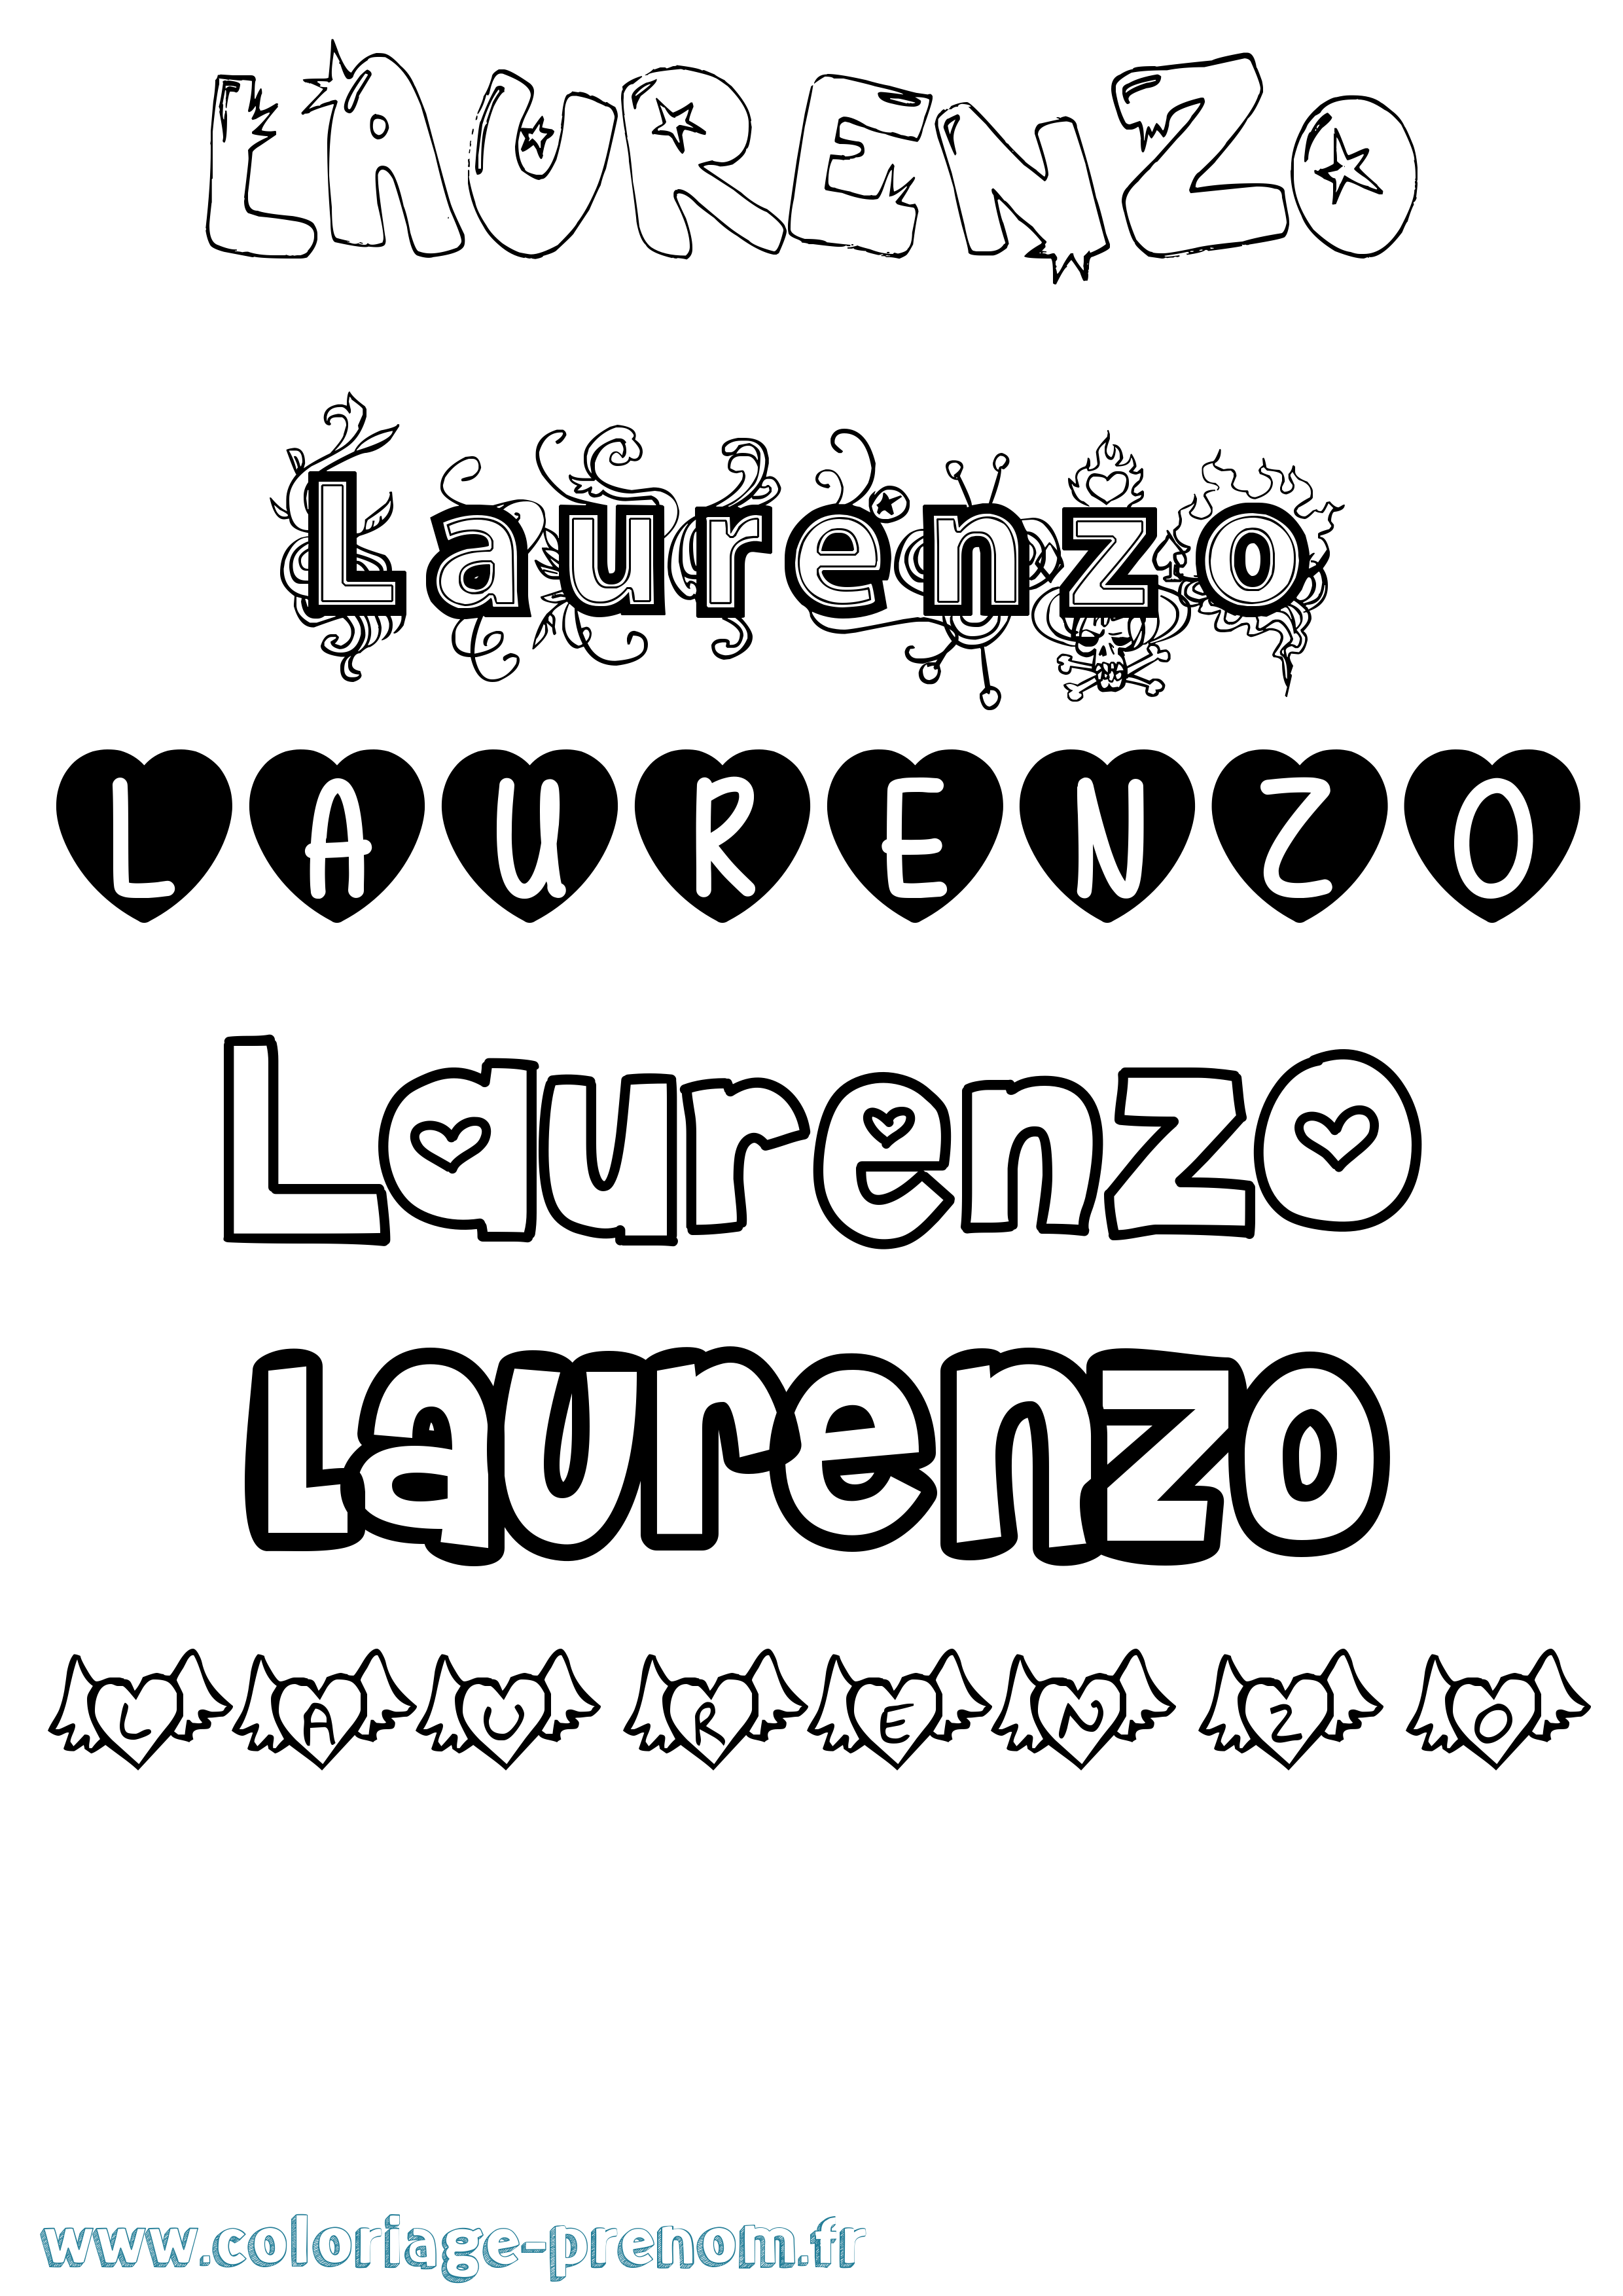 Coloriage prénom Laurenzo Girly